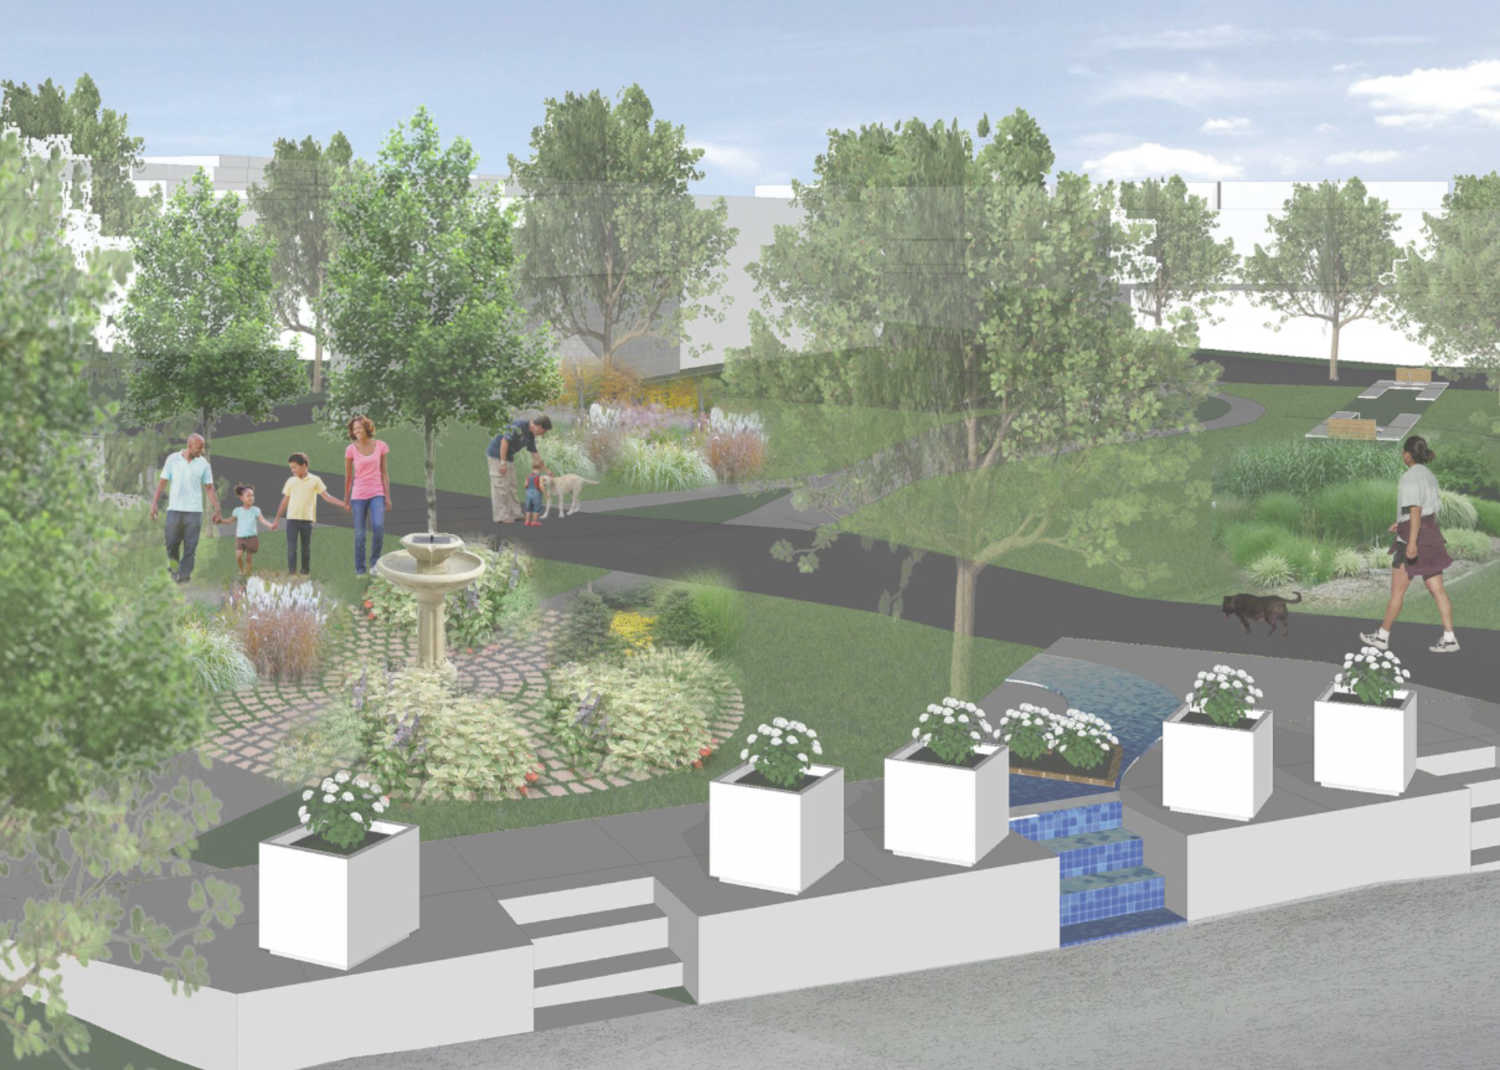 Concept designs for the Racheal Wilson Memorial Garden by Ren Southard with ther Neighborhood Design Center.